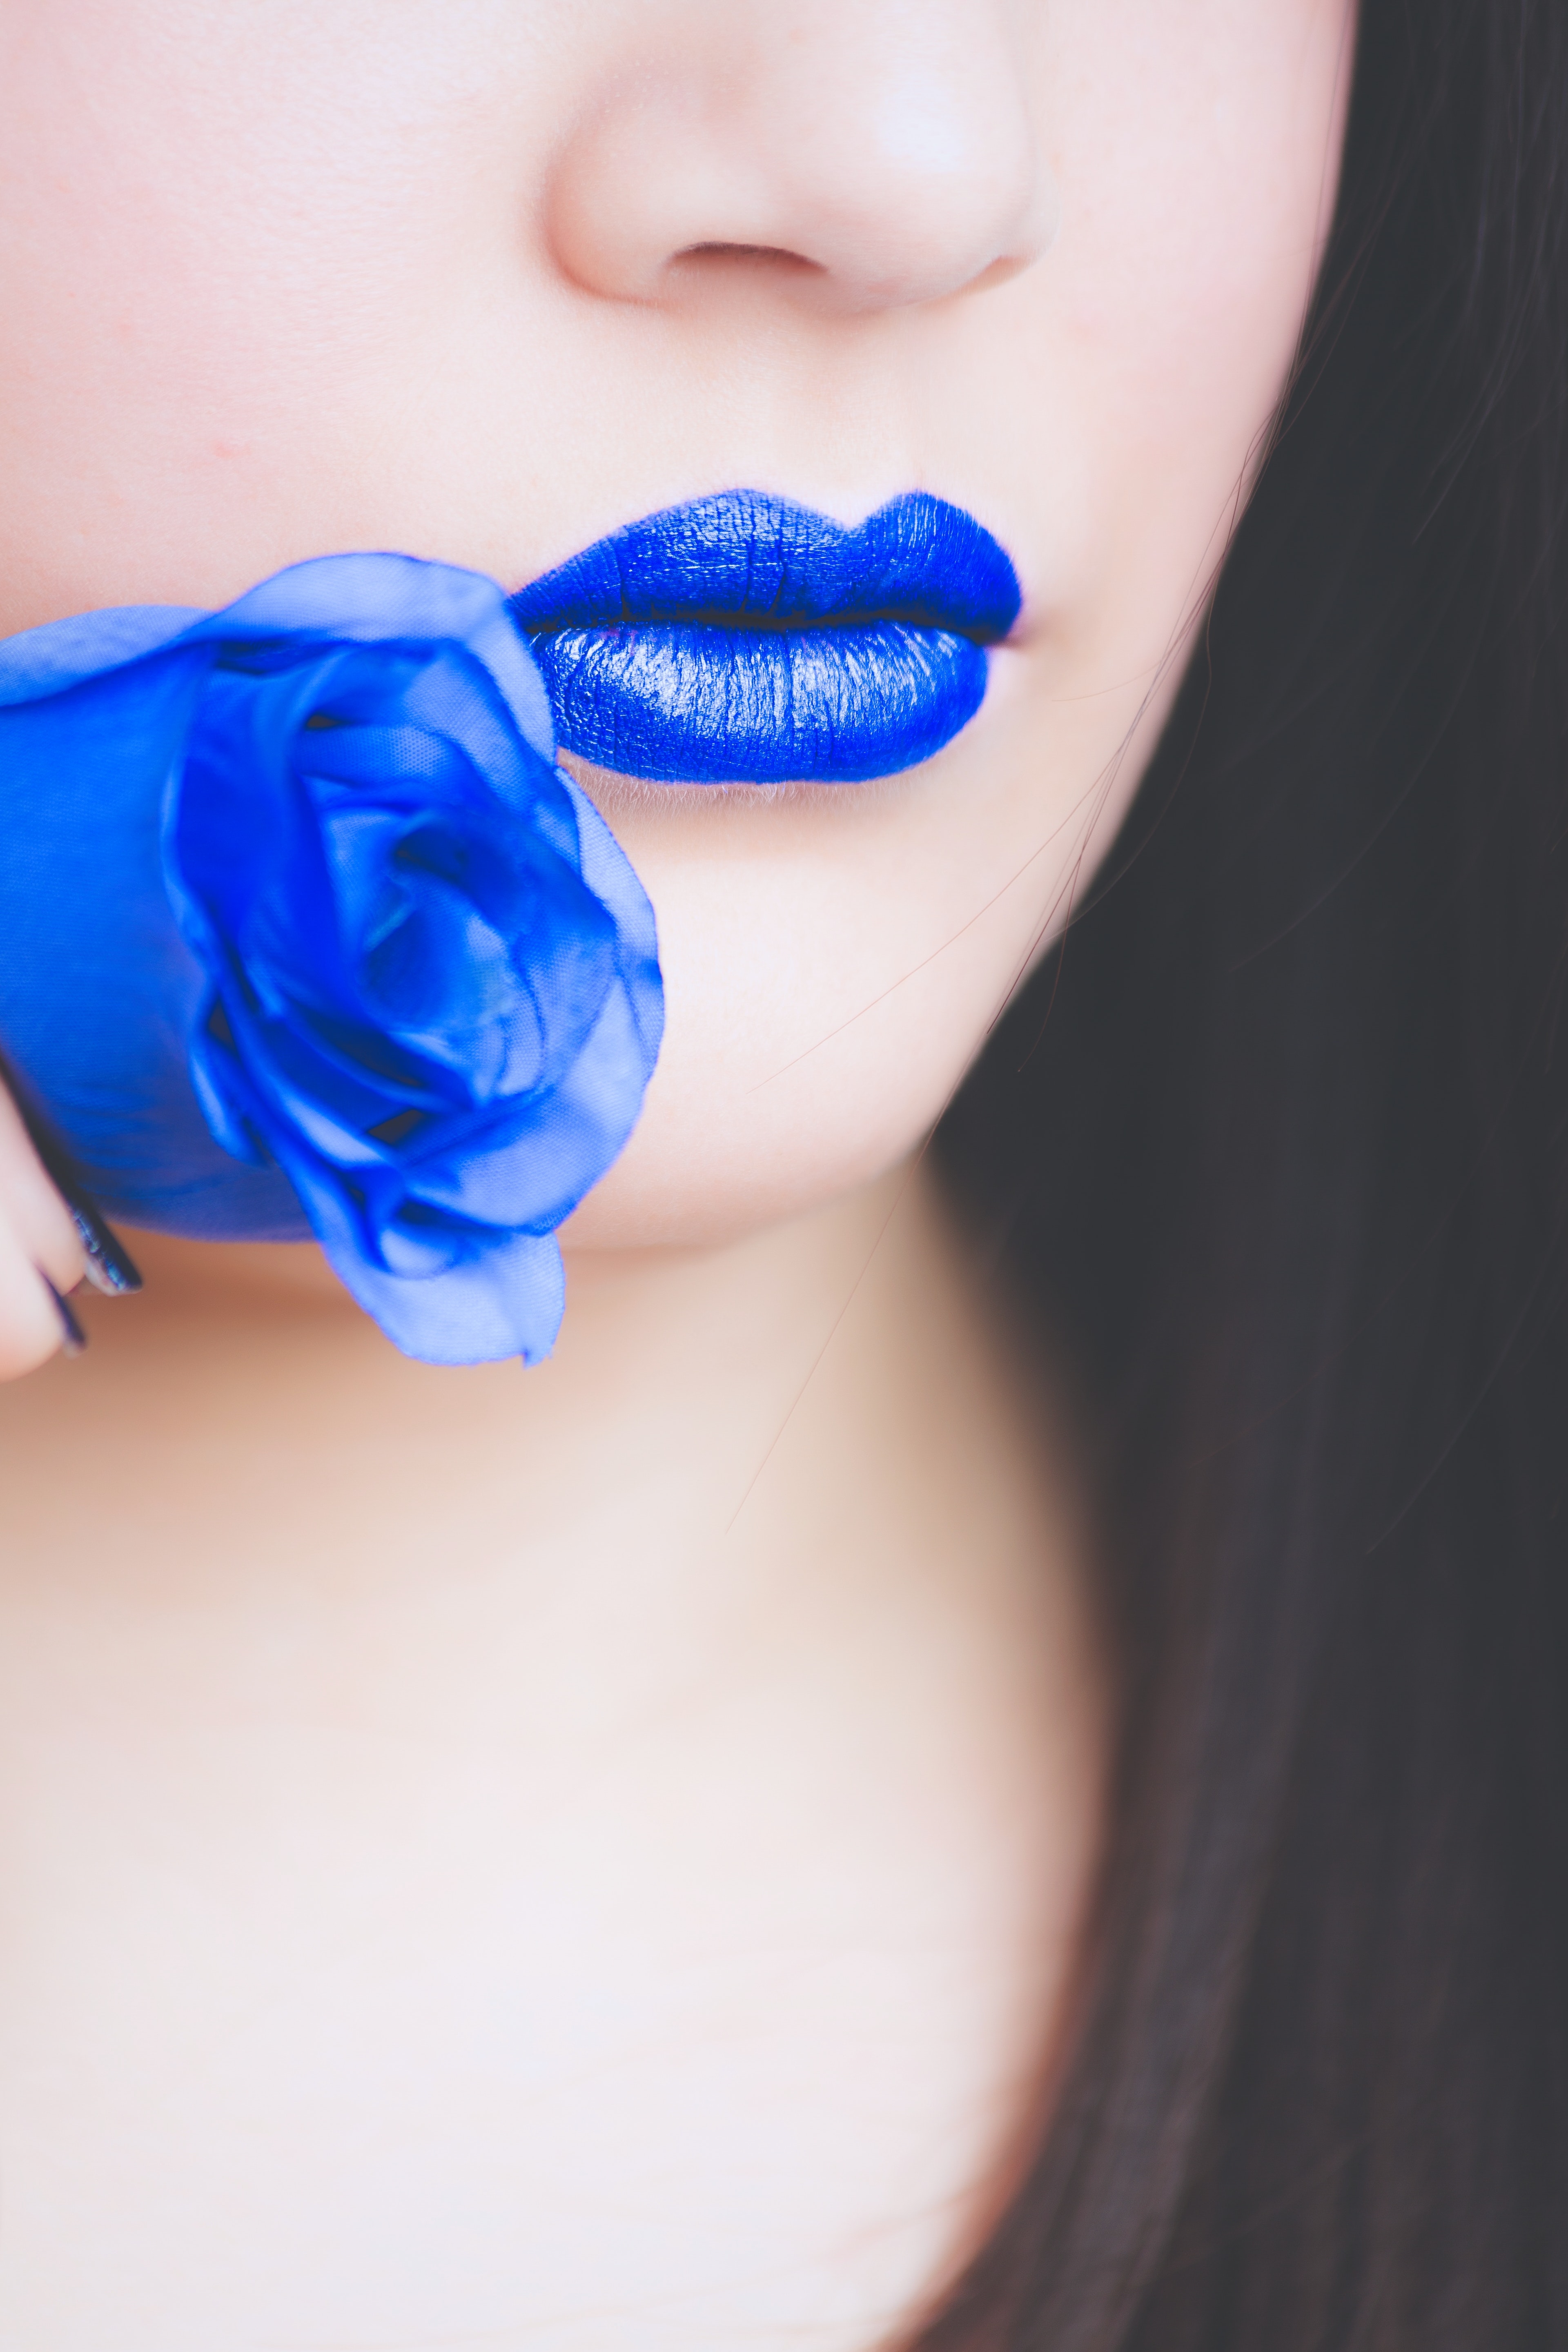 Blue lipstick and blue rose photo